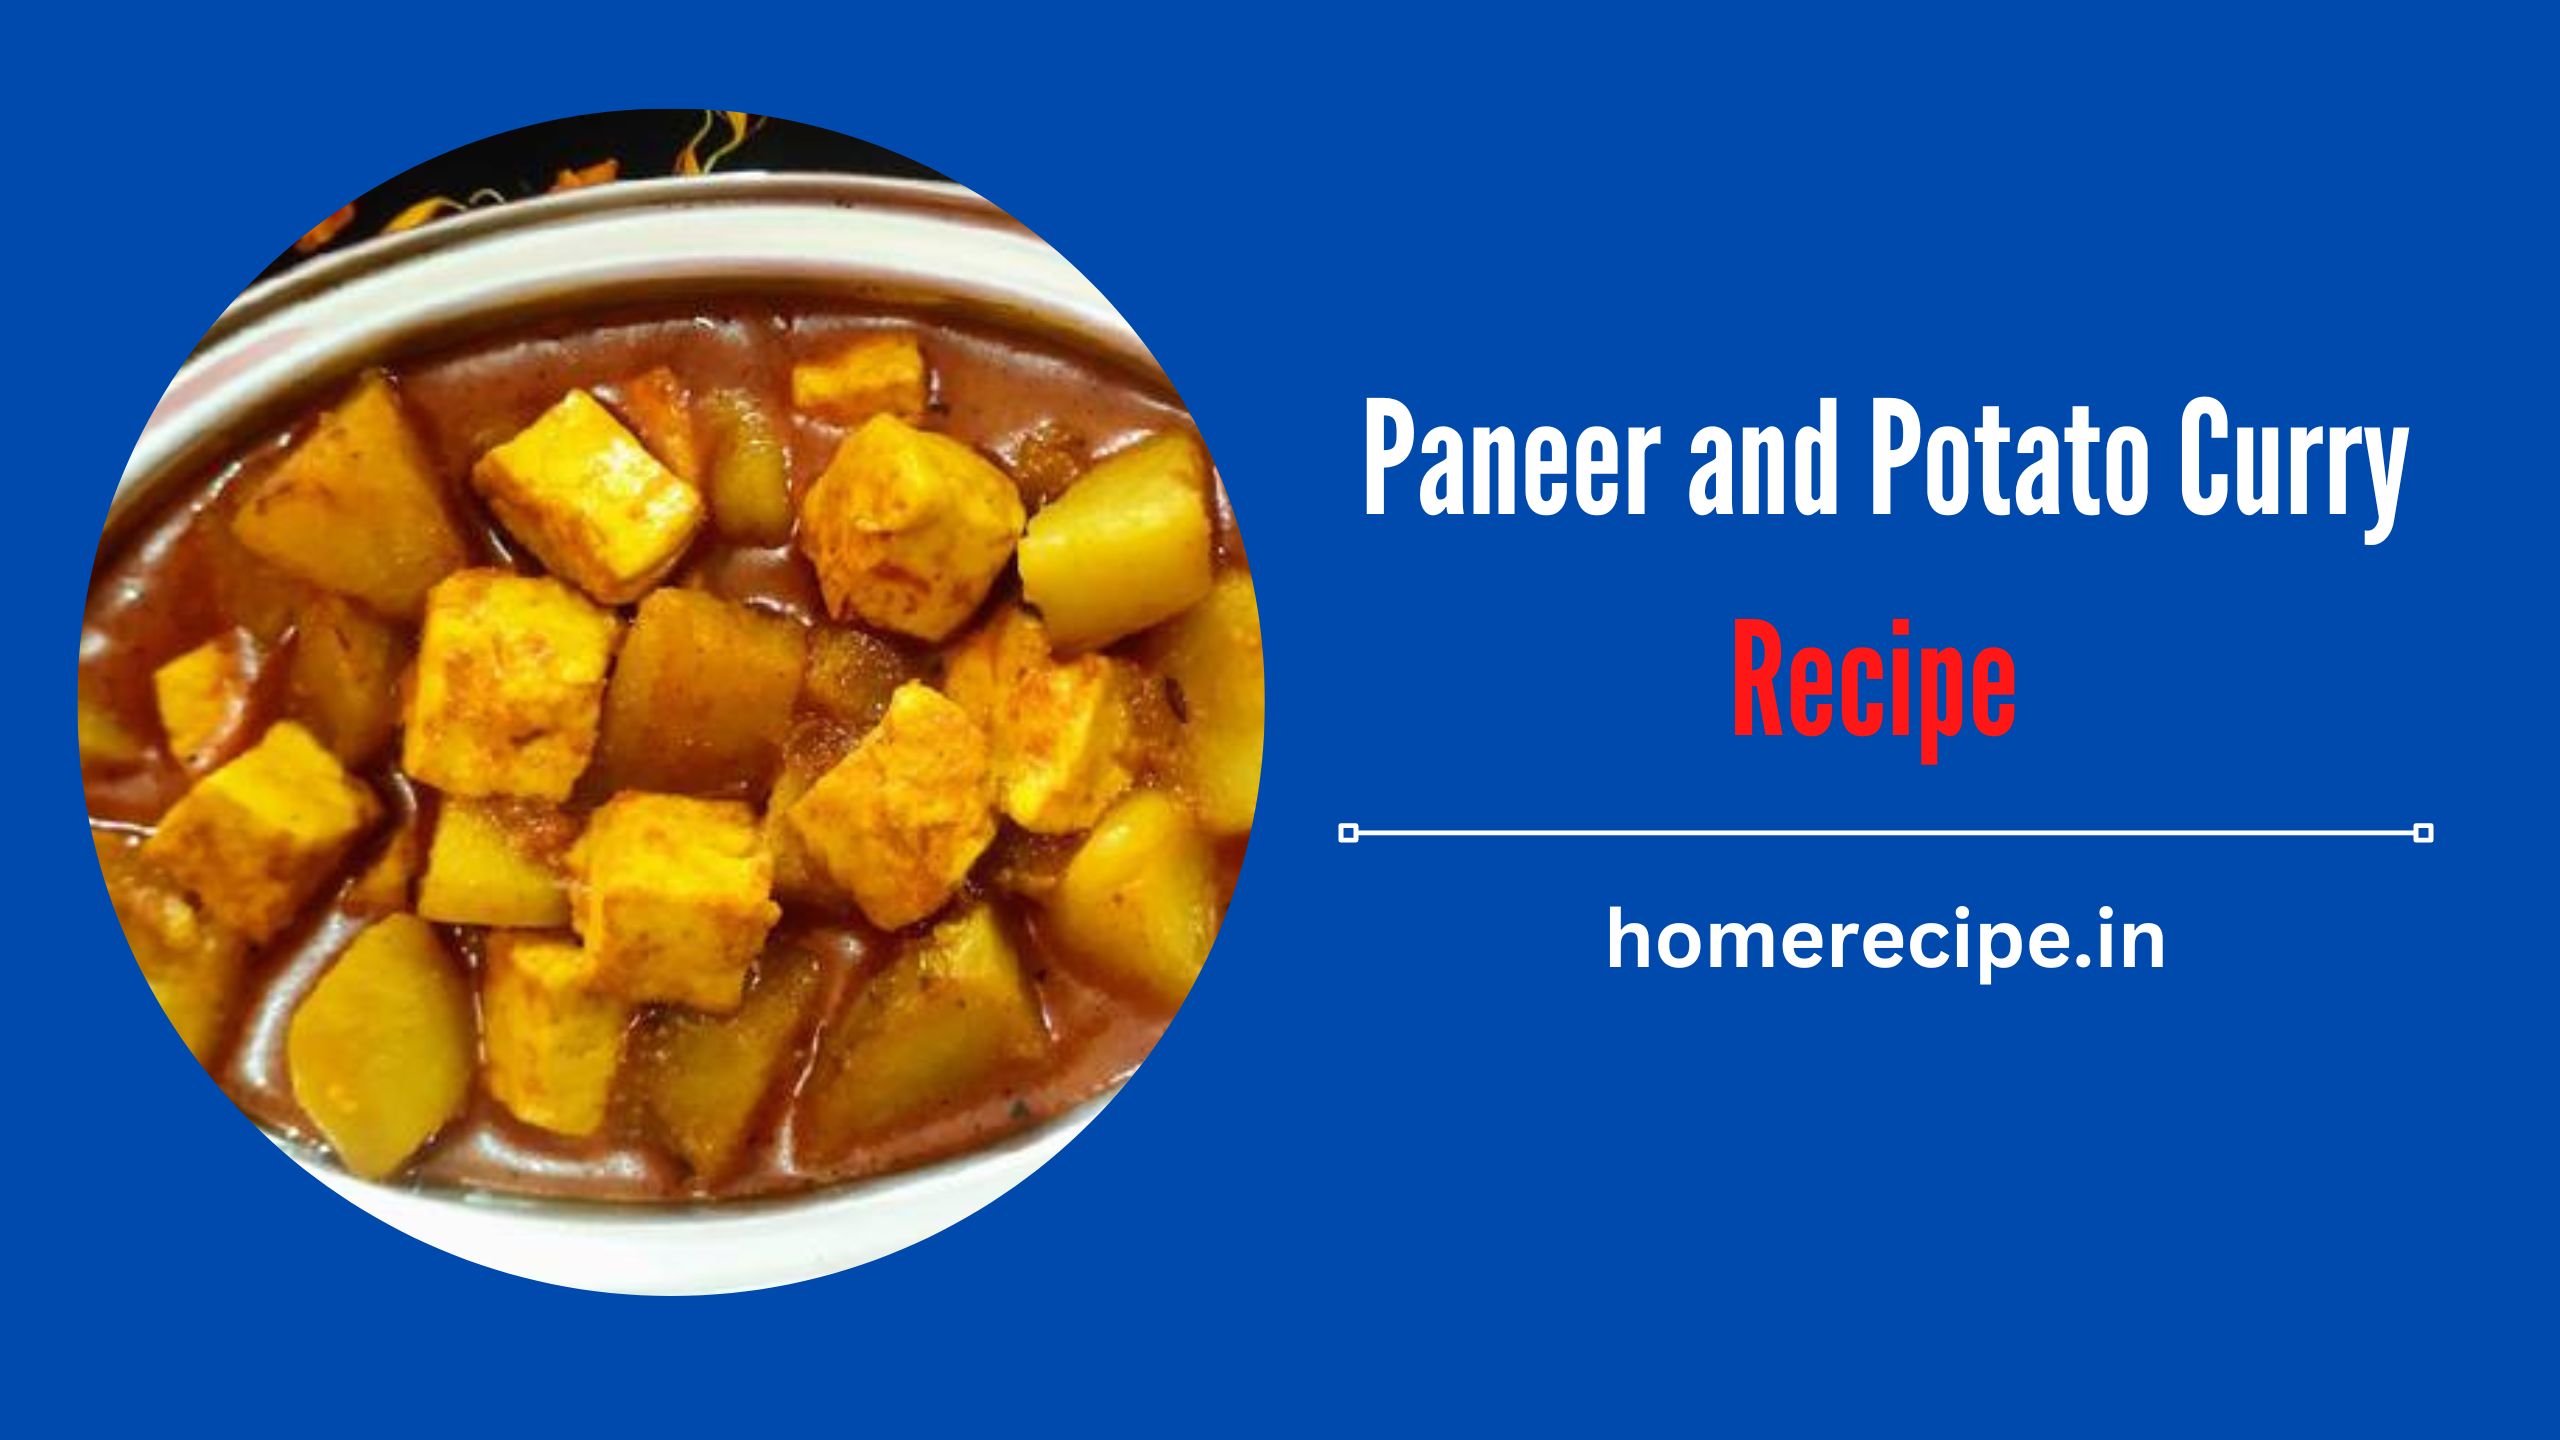 Paneer and Potato Curry